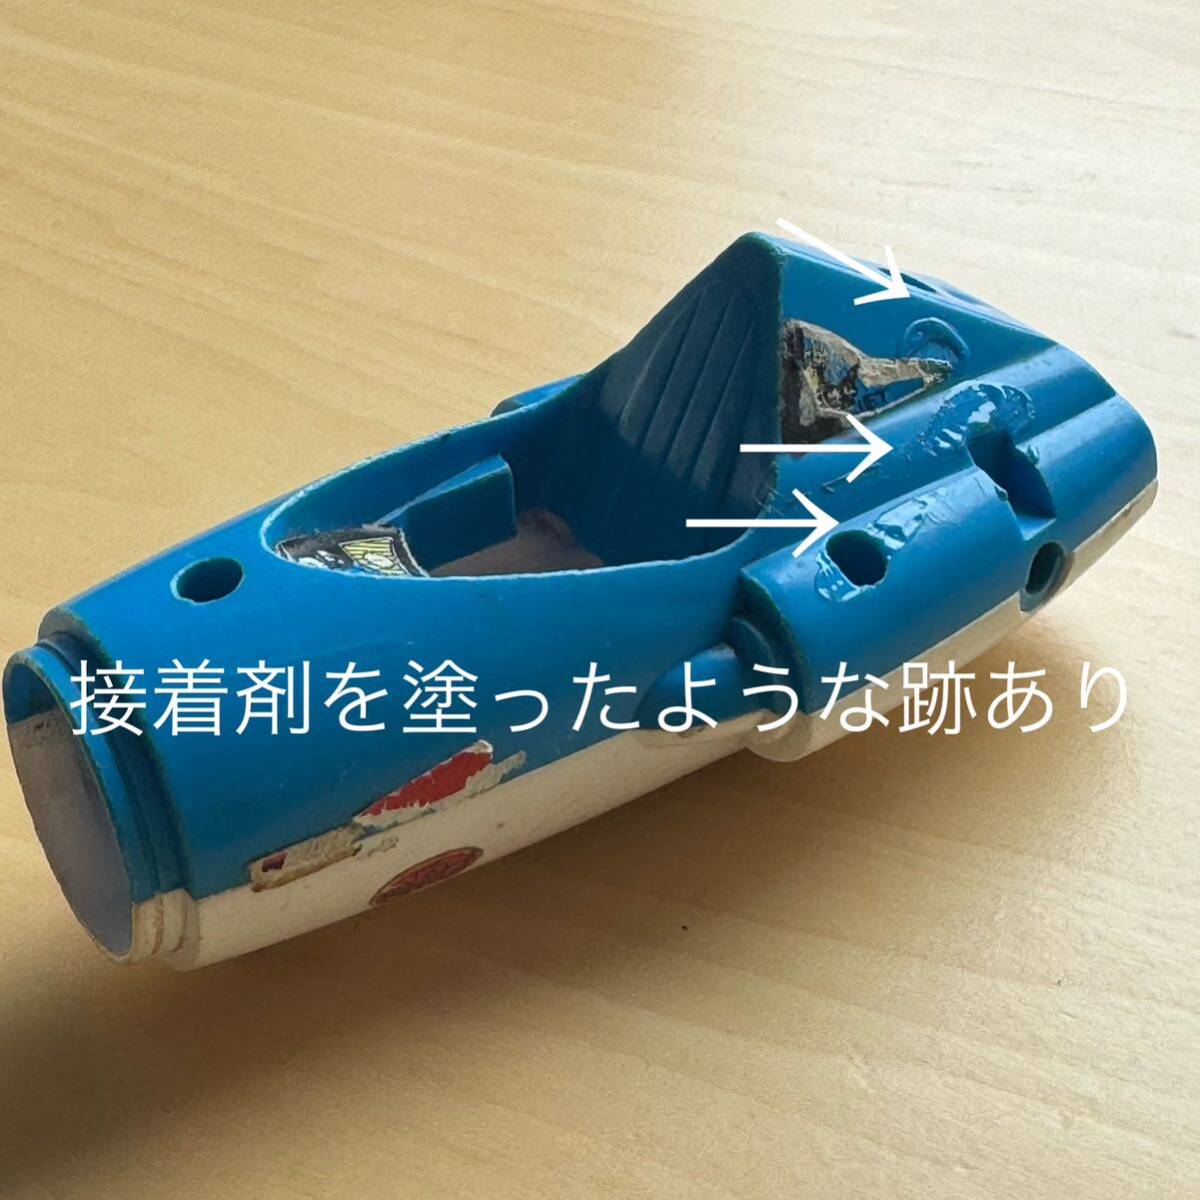 [ Junk ] Microman parts super jet auto buggy bru crane micro jpy record UFO Spy maji car nsi- Spider that time thing 